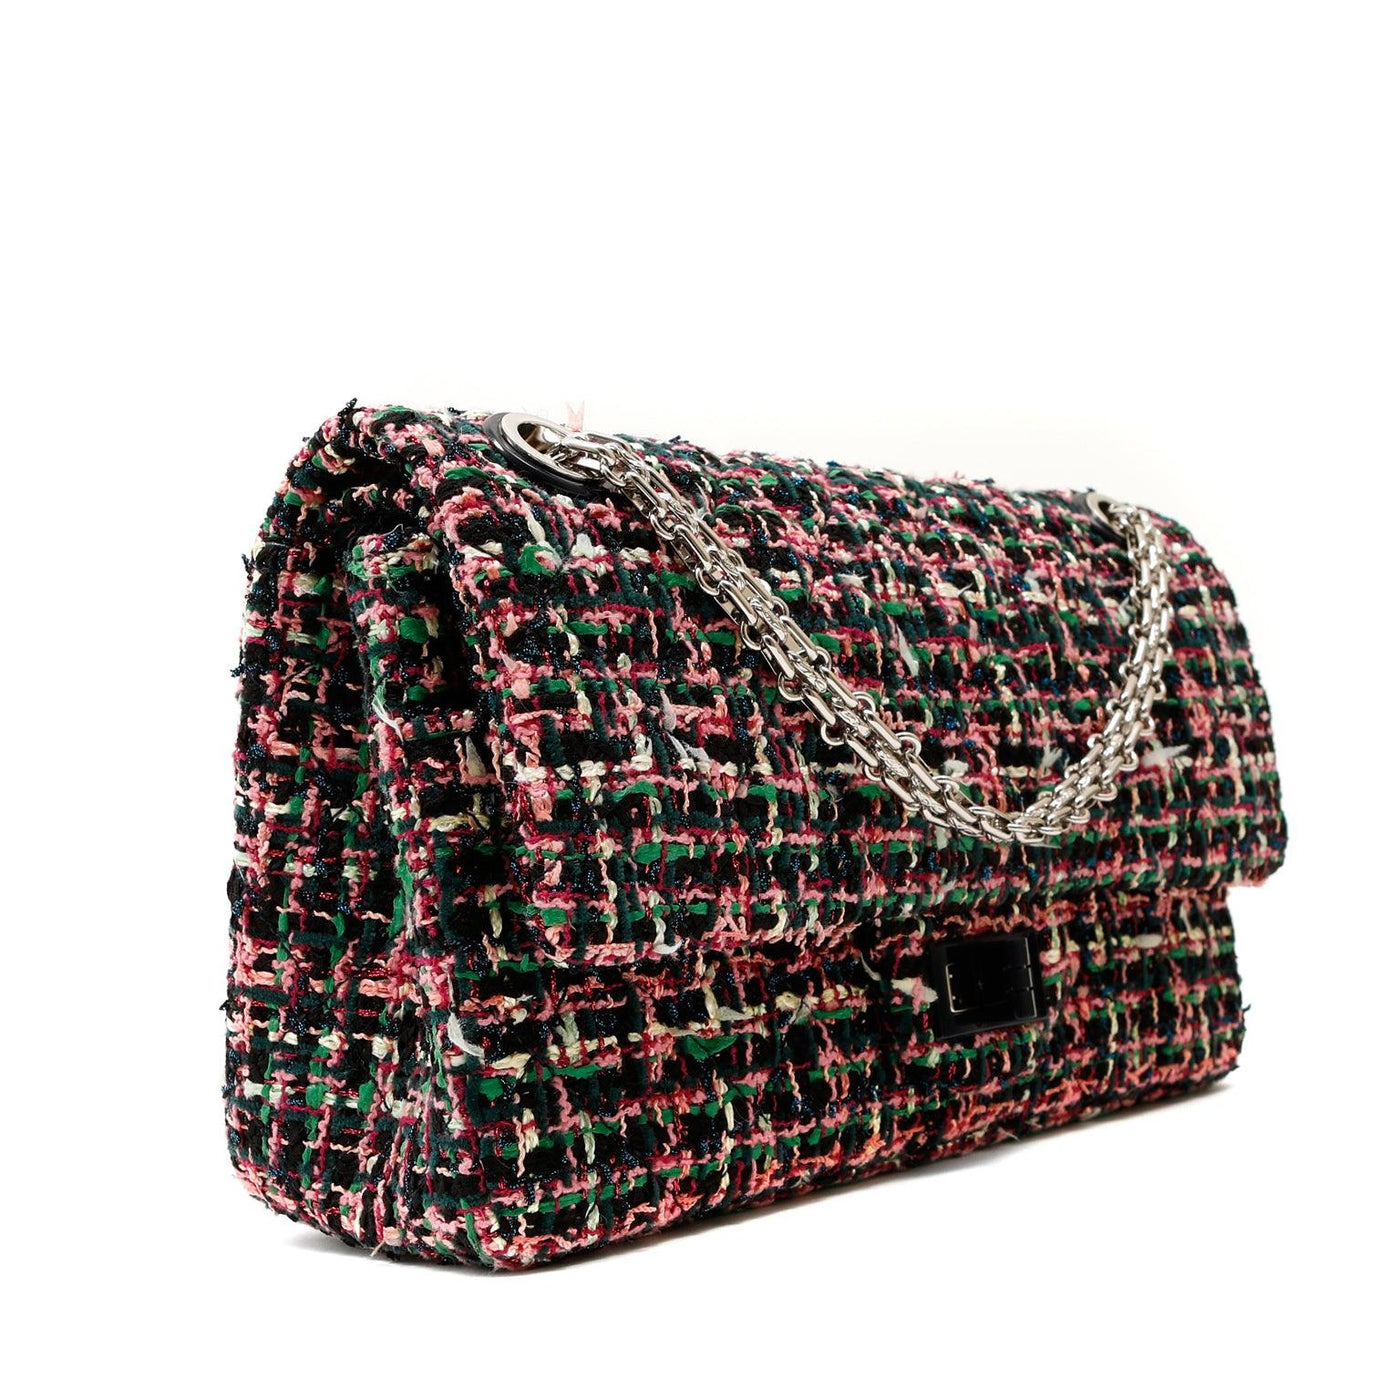 Chanel  Multicolored Tweed Reissue Medium Flap Bag - Only Authentics